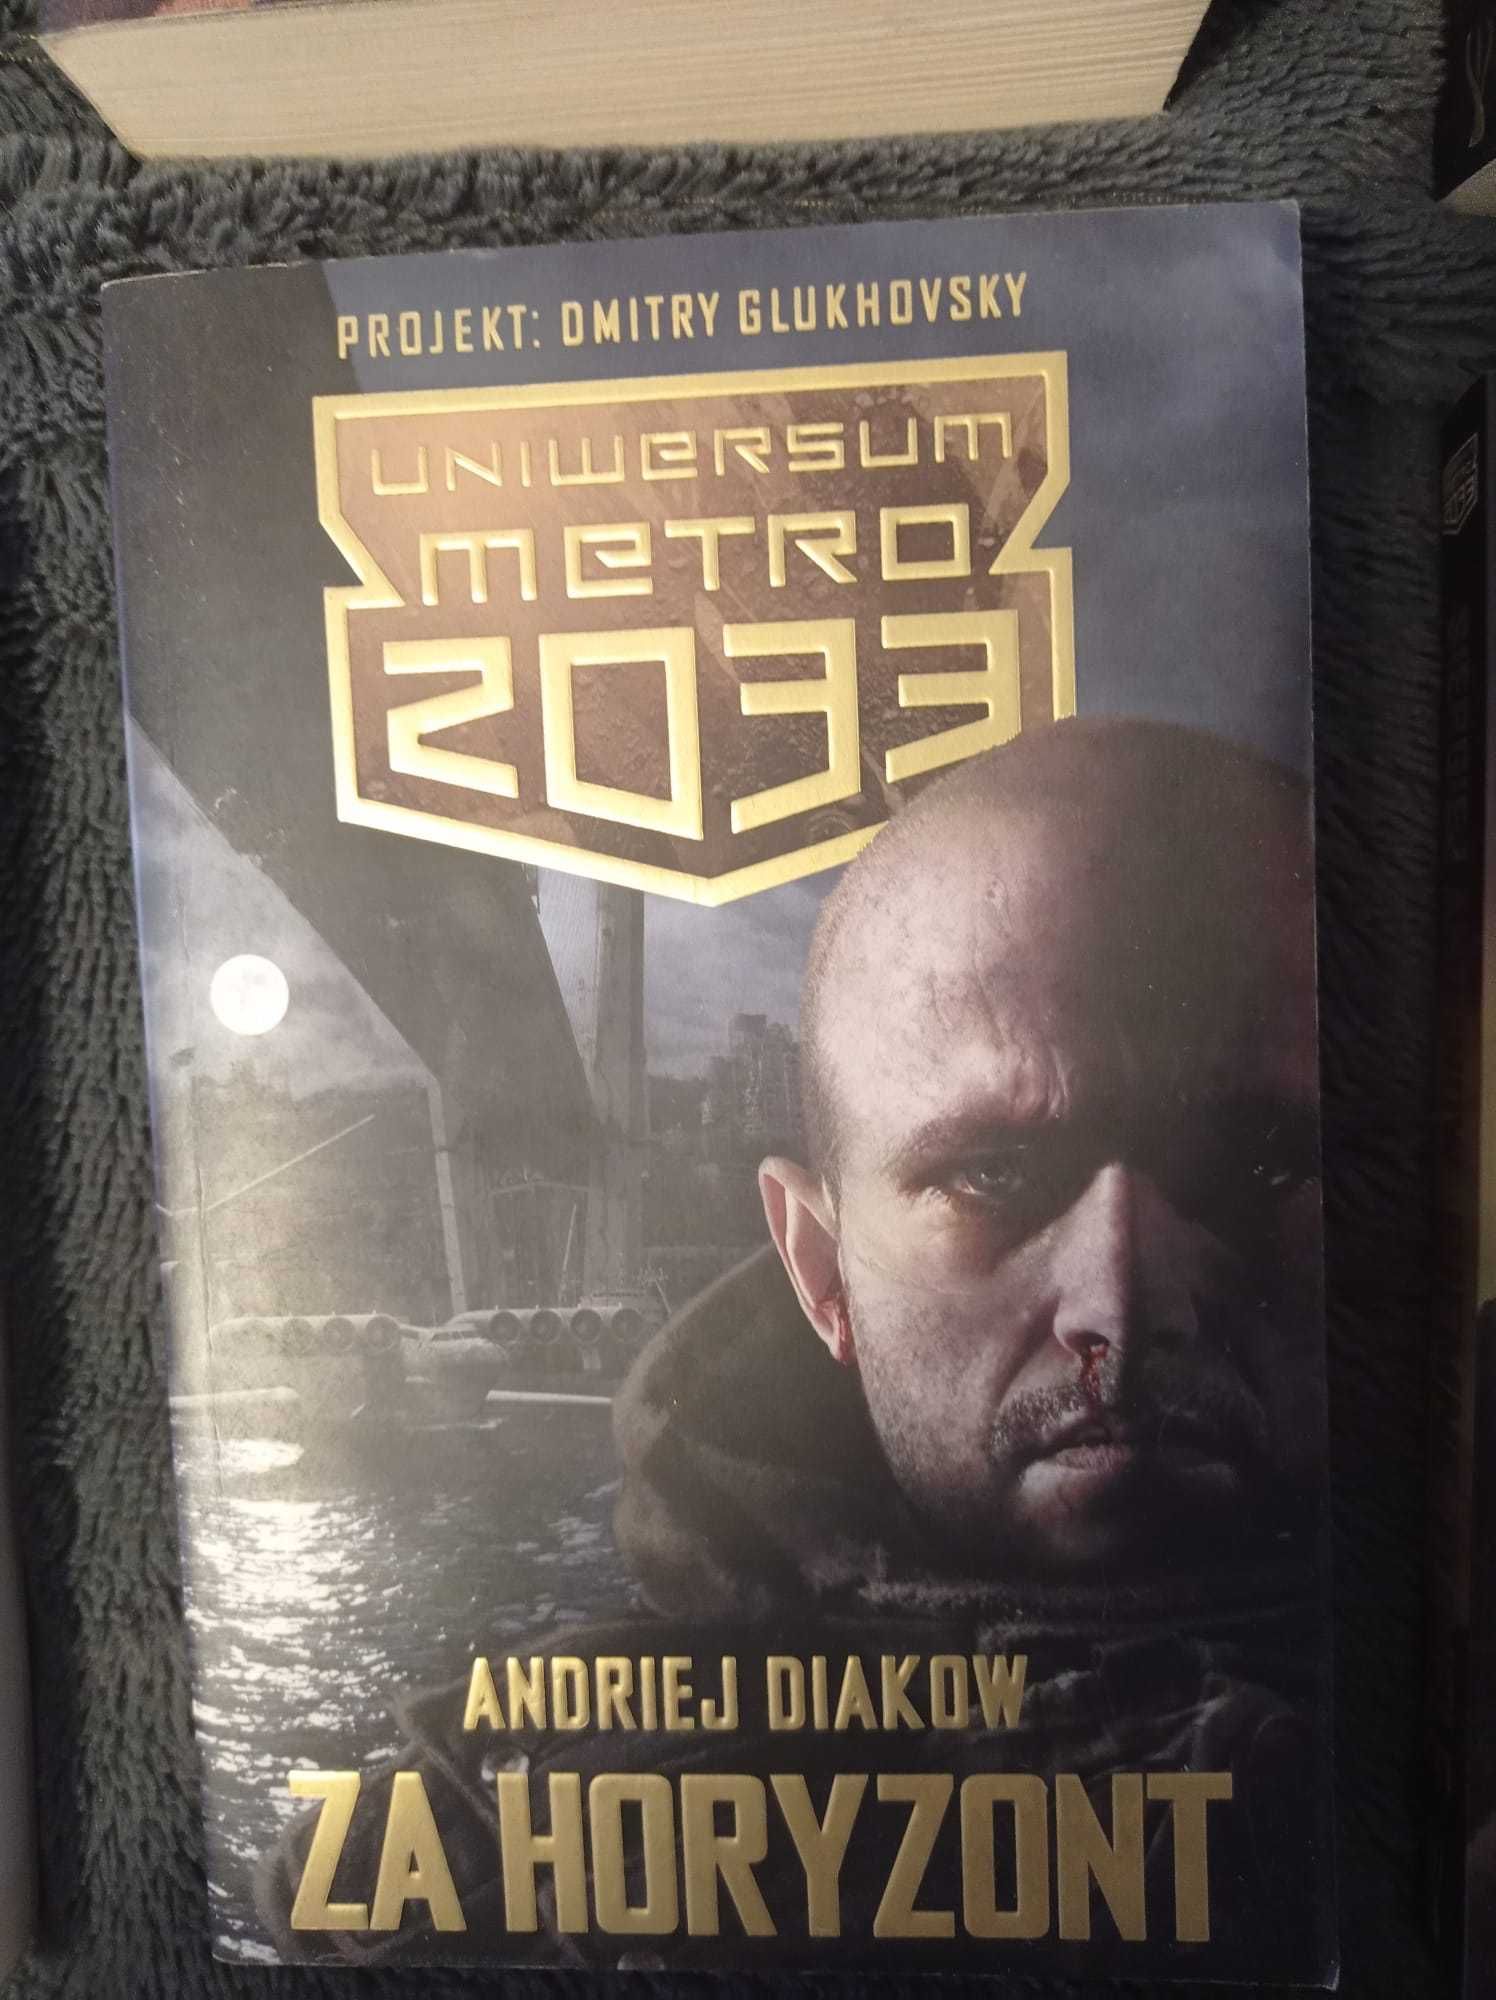 Za horyzont A. Diakow - Uniwersum Metro 2033